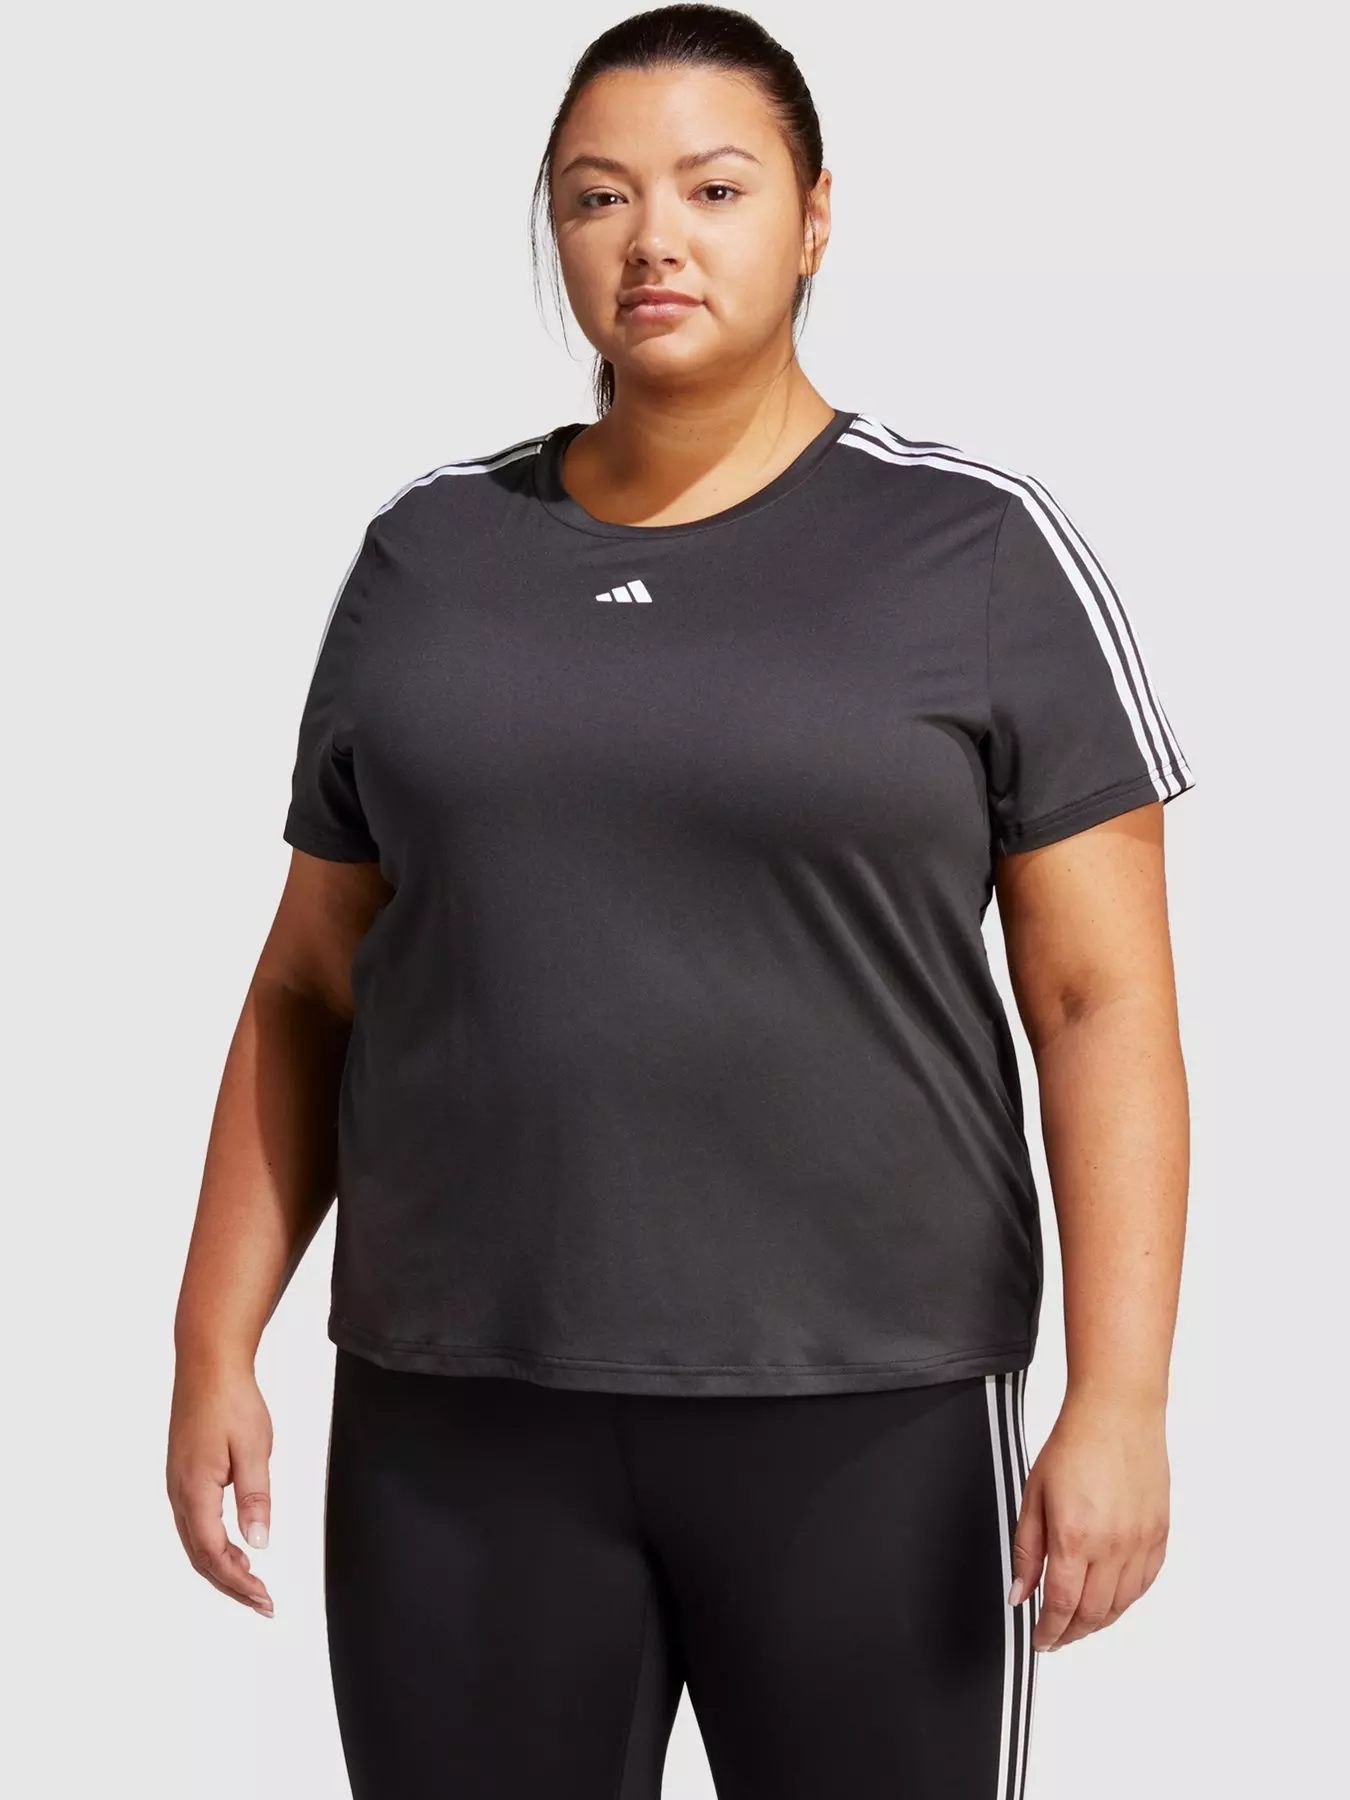 adidas Ladies' 3-Stripe Tight with Mesh, Black, Size Women's Large